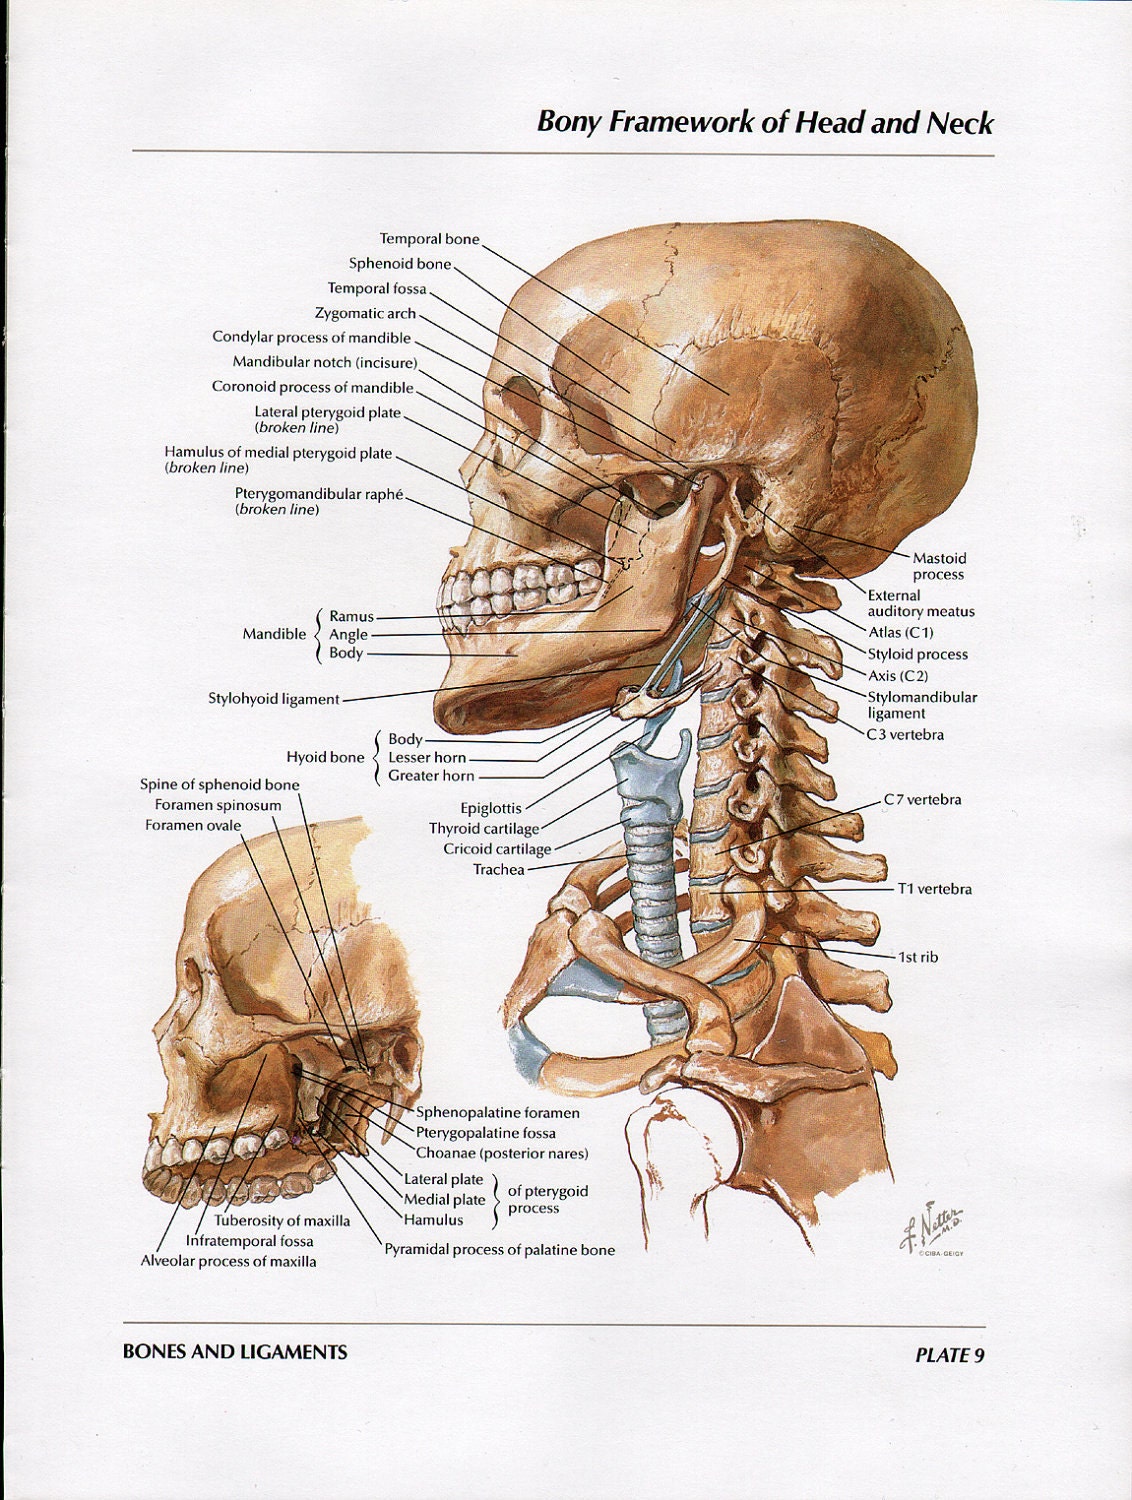 Head and Neck Bones Full Color Vintage Print Atlas of Human